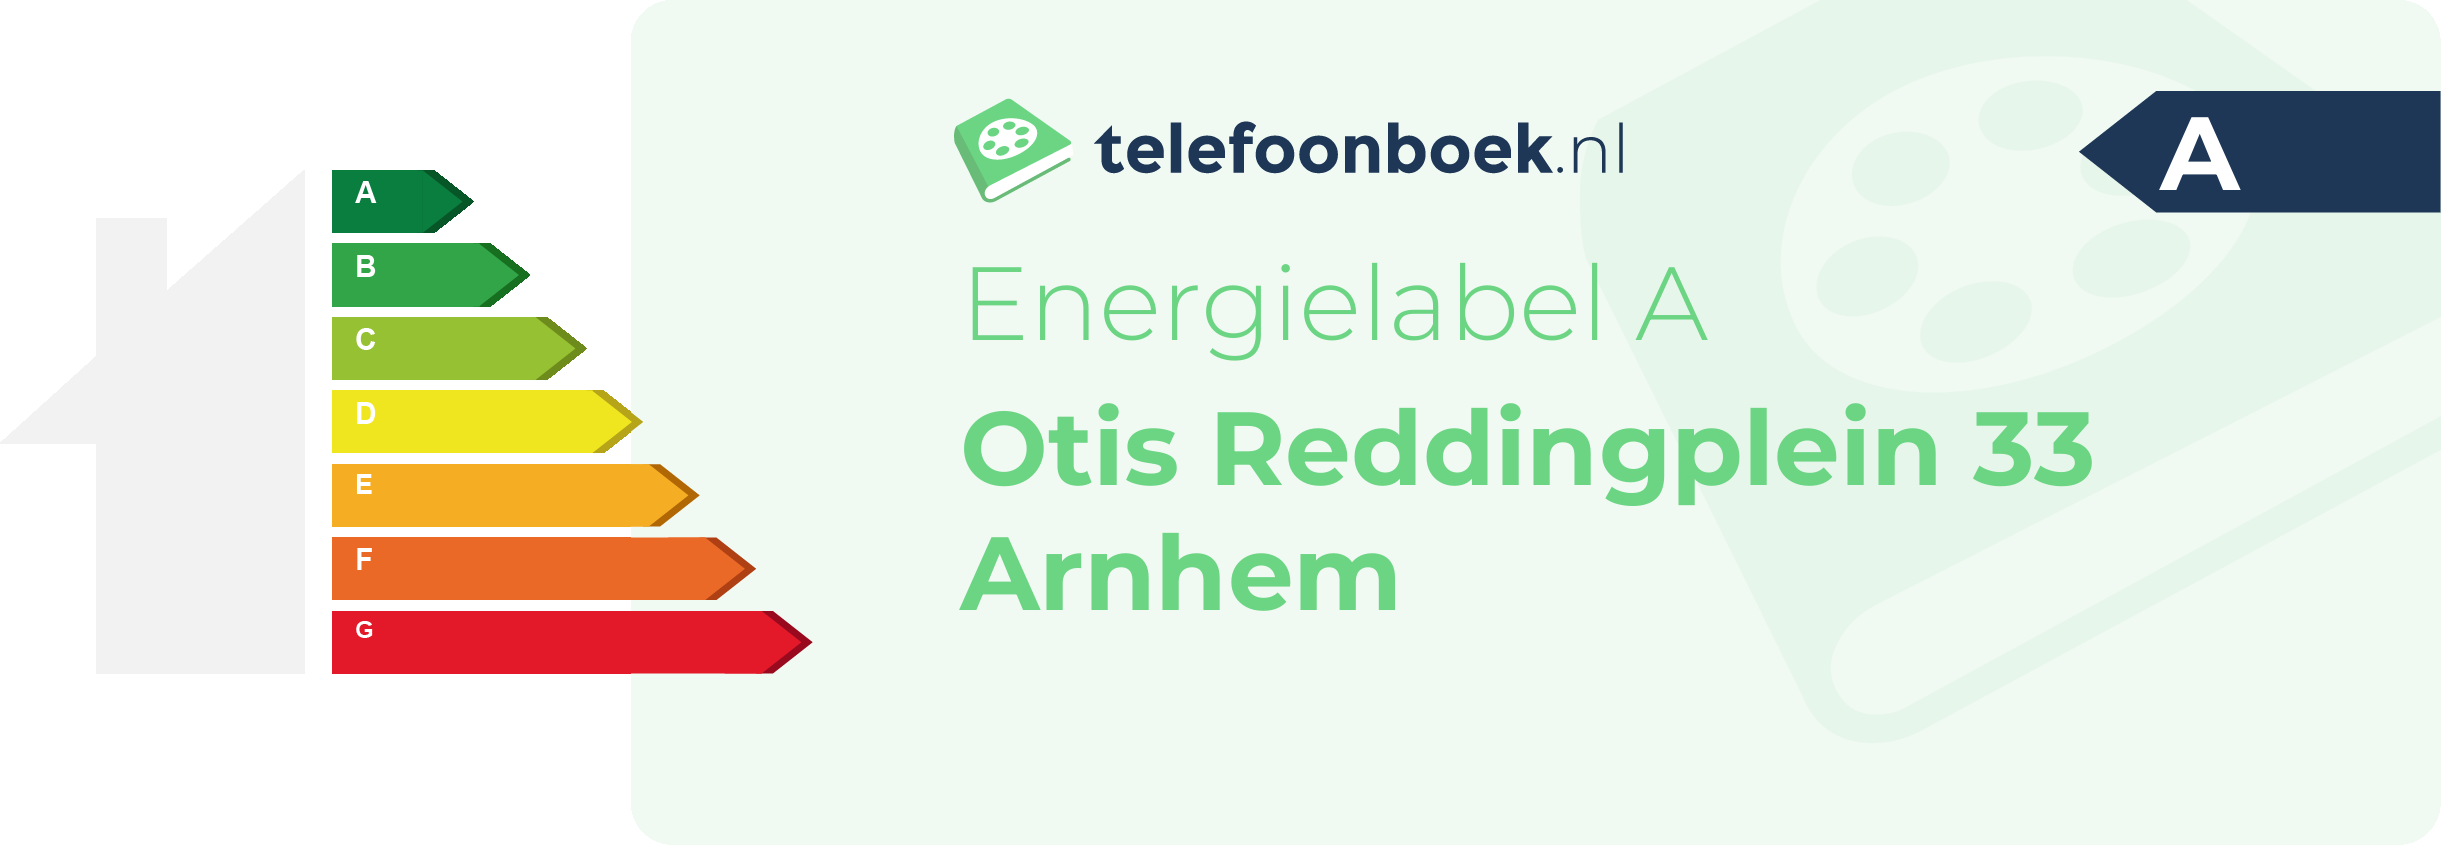 Energielabel Otis Reddingplein 33 Arnhem